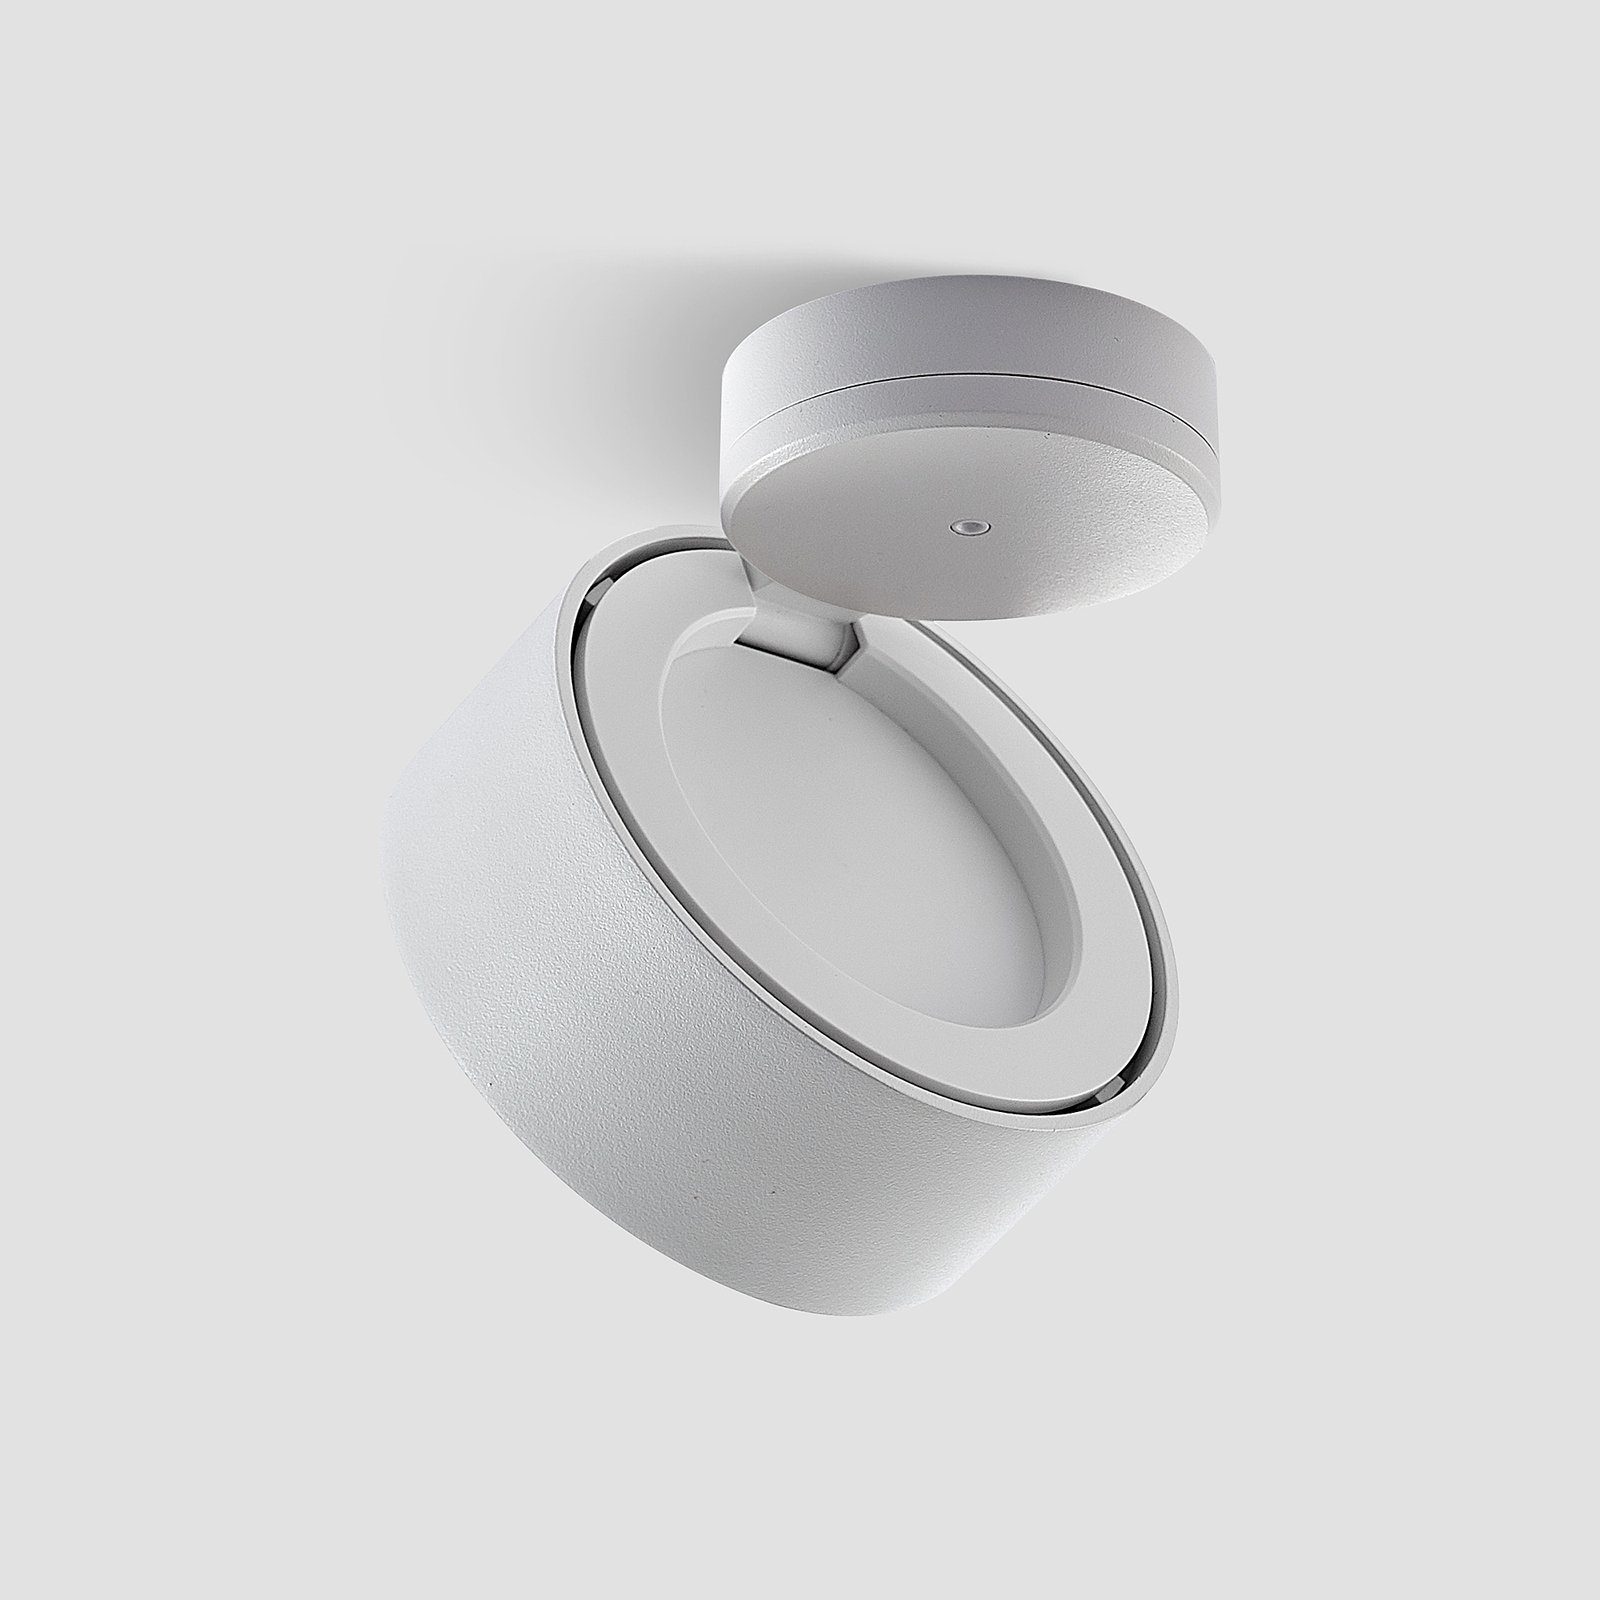 Arcchio Ranka plafonnier LED, blanc, inclinable